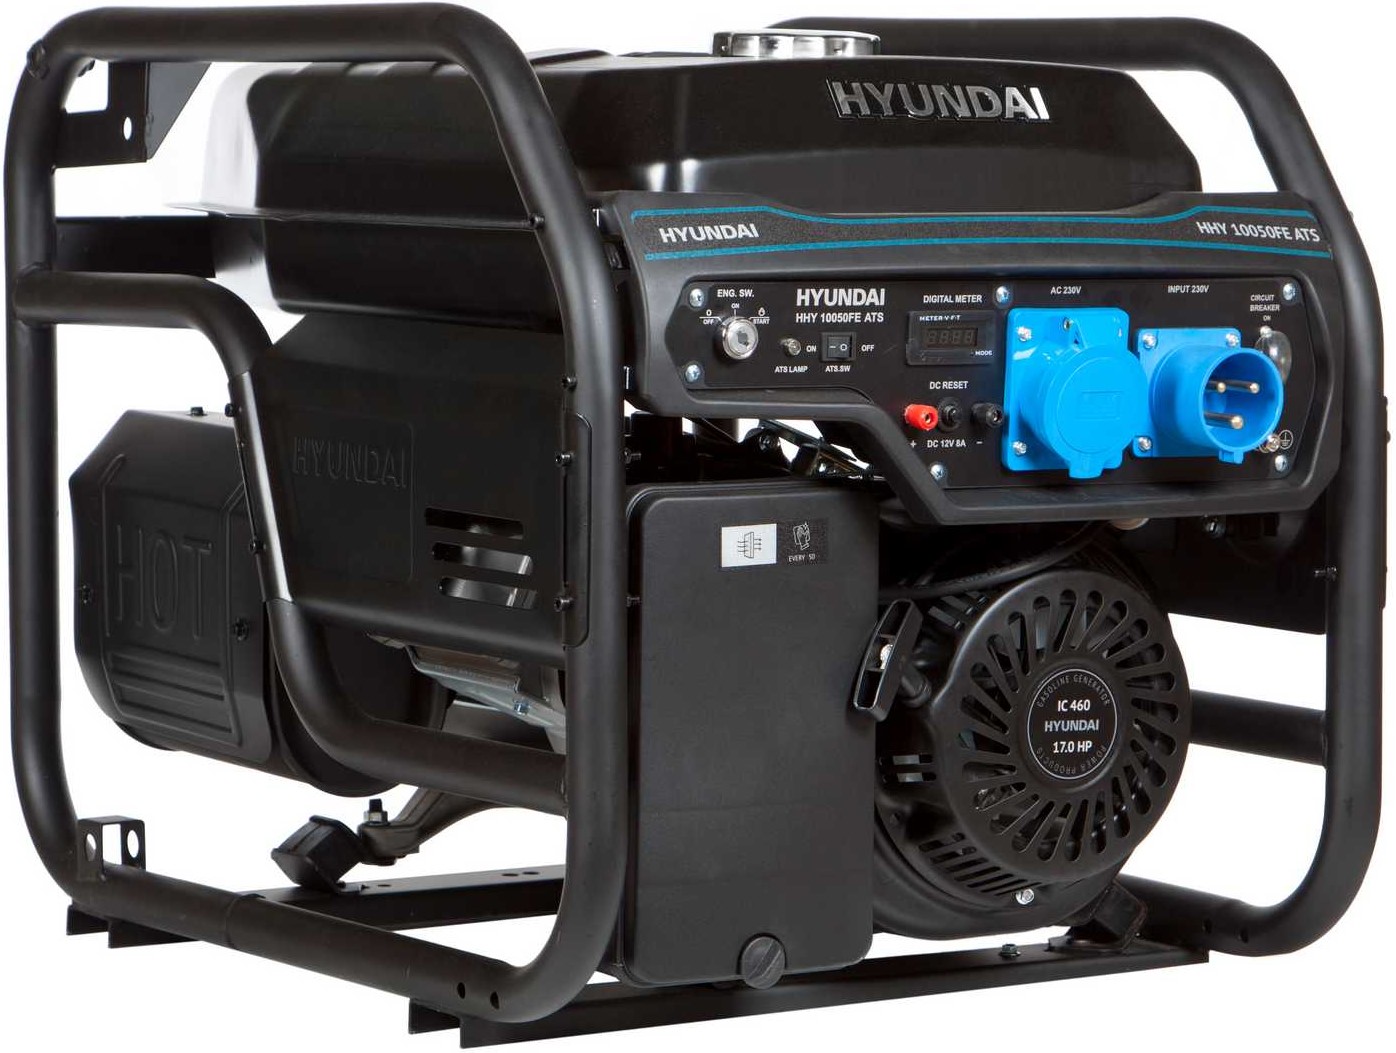 Характеристики генератор Hyundai HHY 10050FE ATS